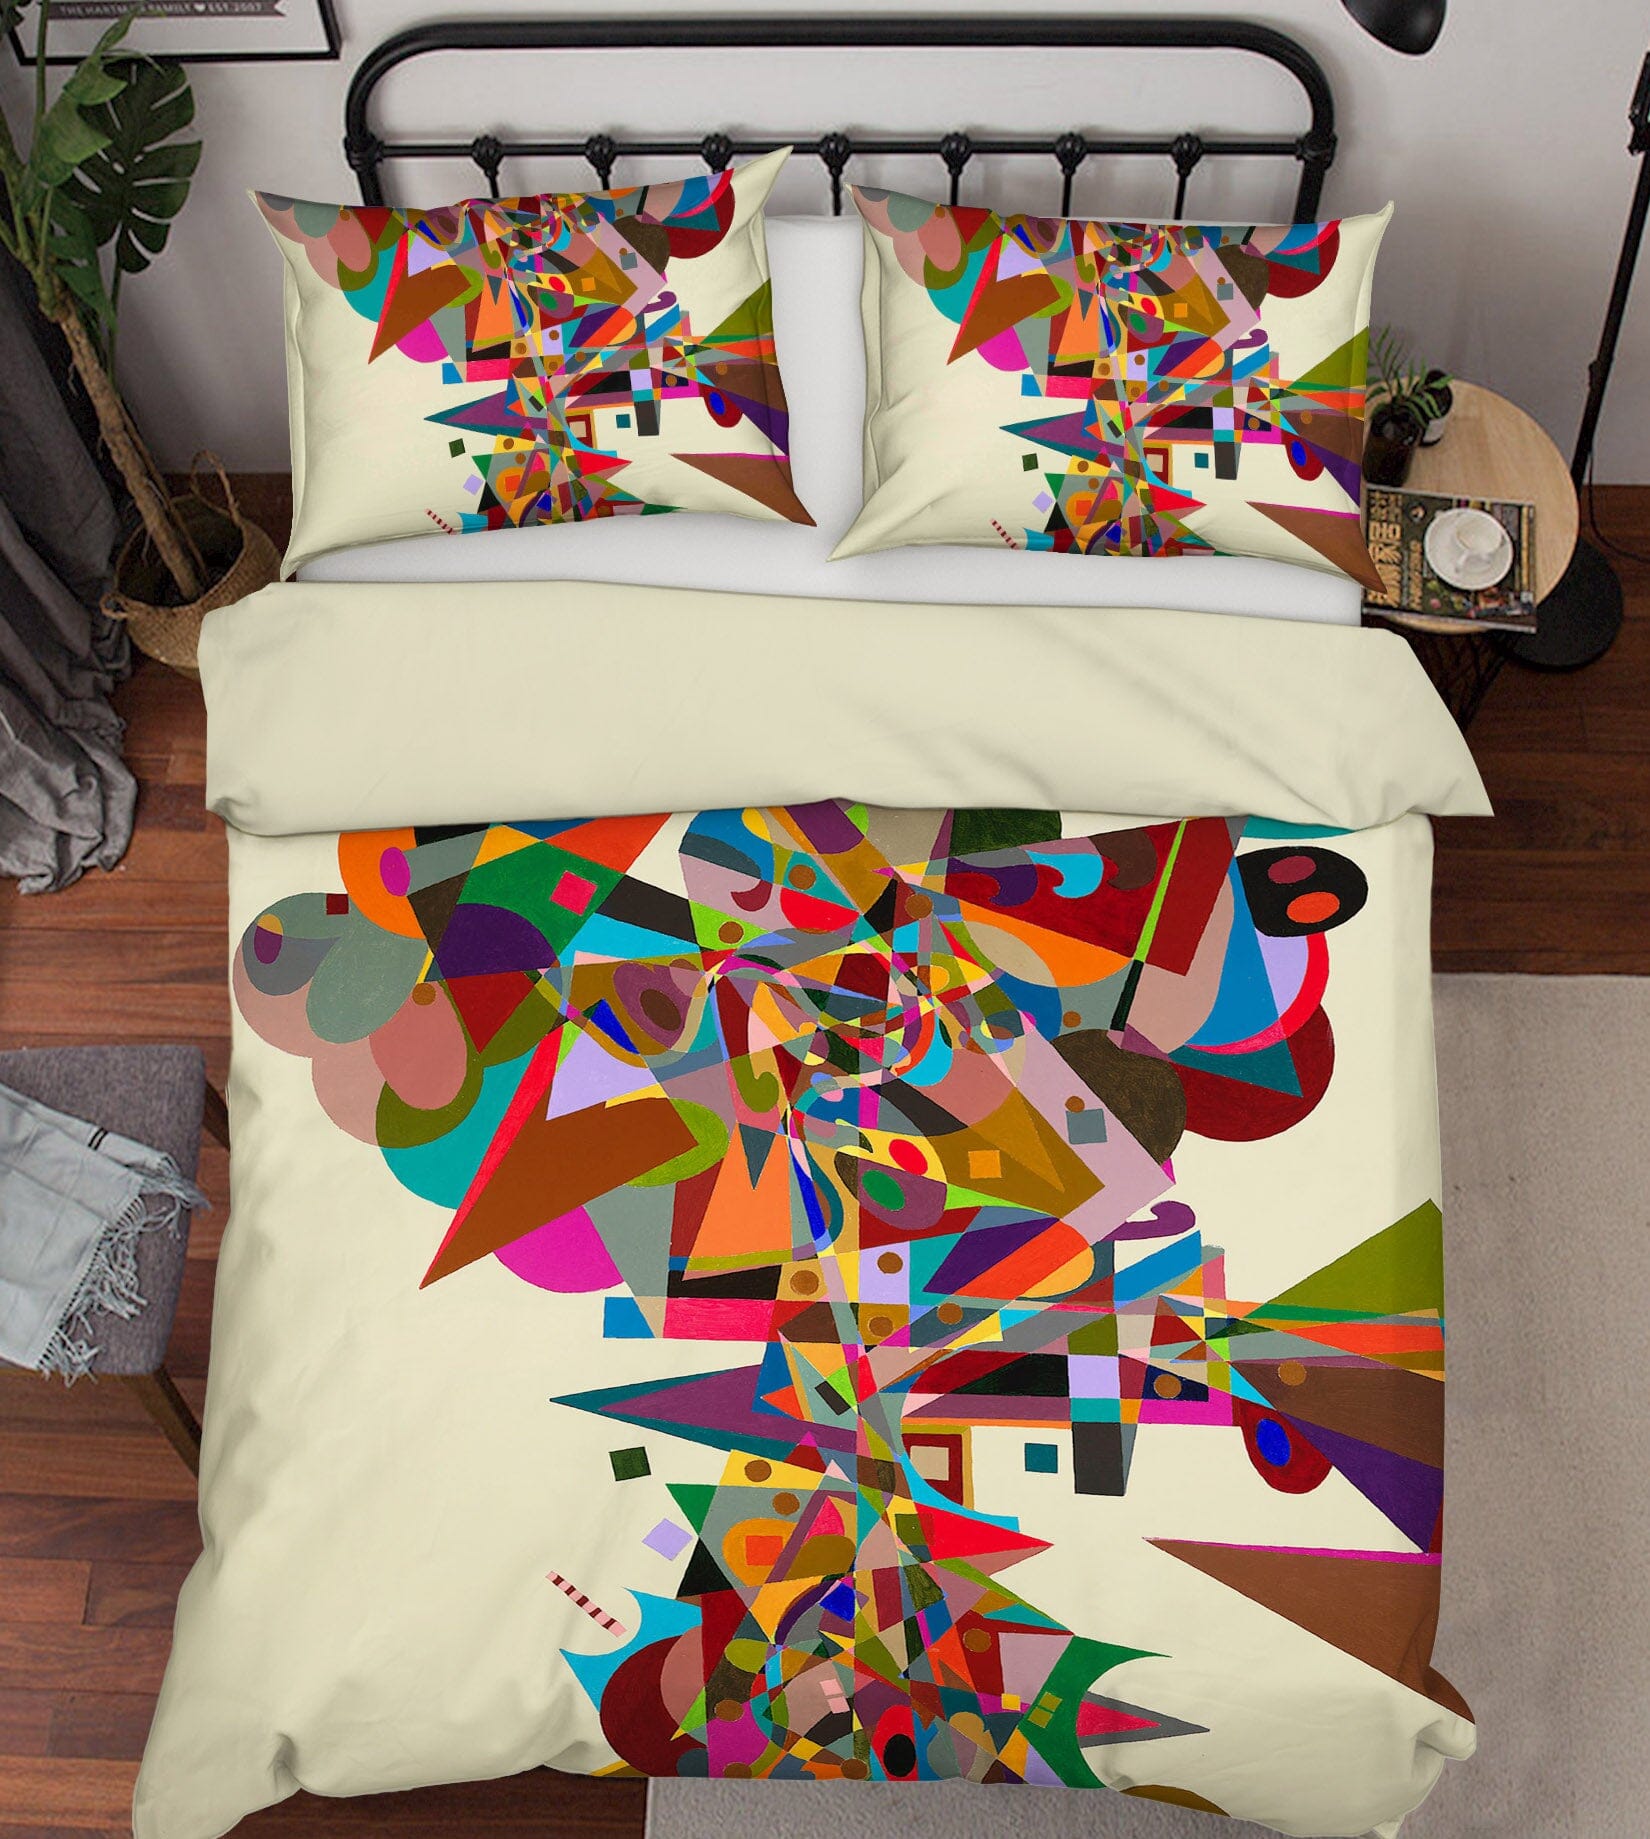 3D Color Pattern 2001 Allan P. Friedlander Bedding Bed Pillowcases Quilt Quiet Covers AJ Creativity Home 